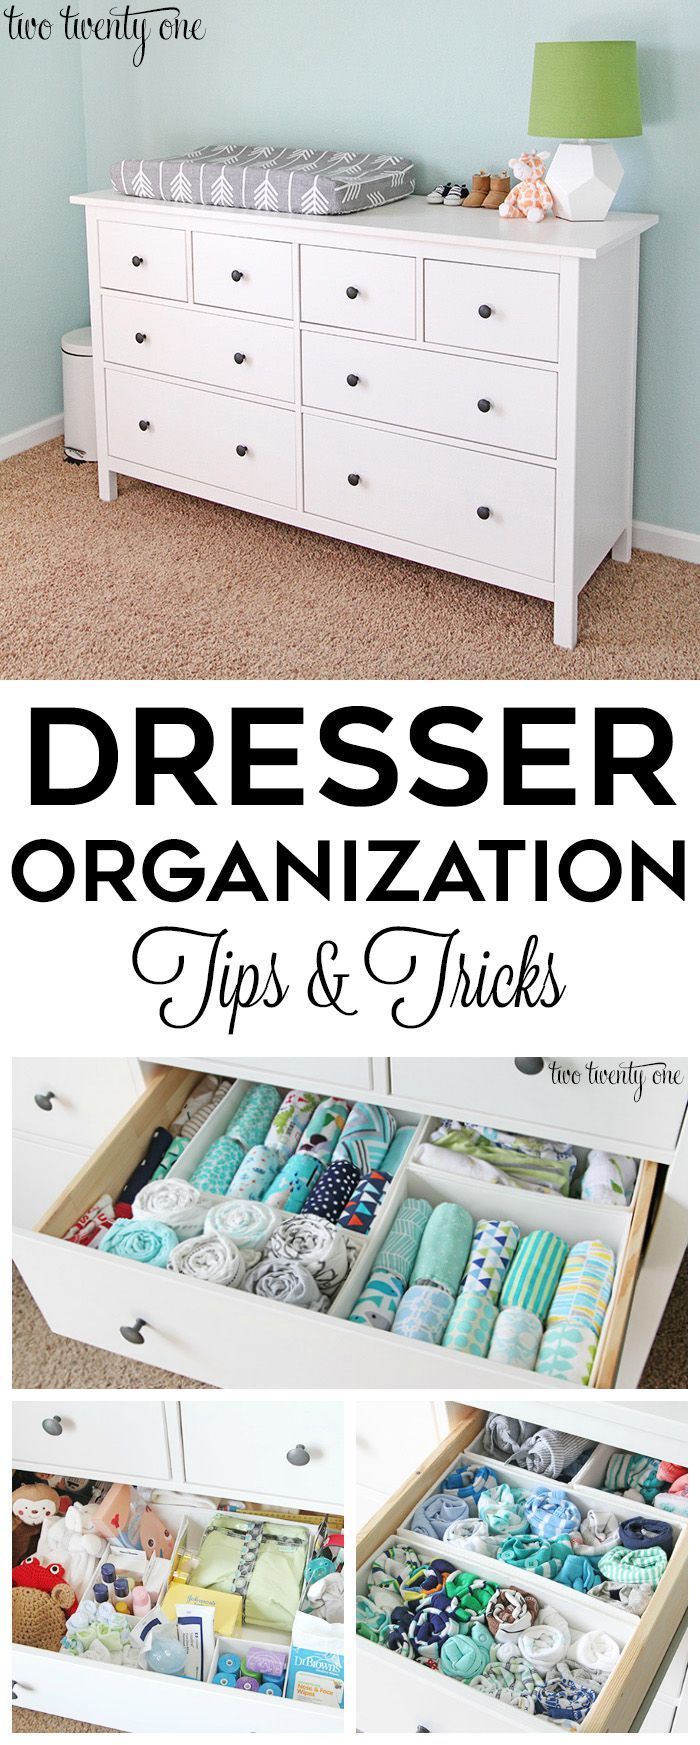 GREAT tips and tricks for an organized dresser, especially a nursery dresser!